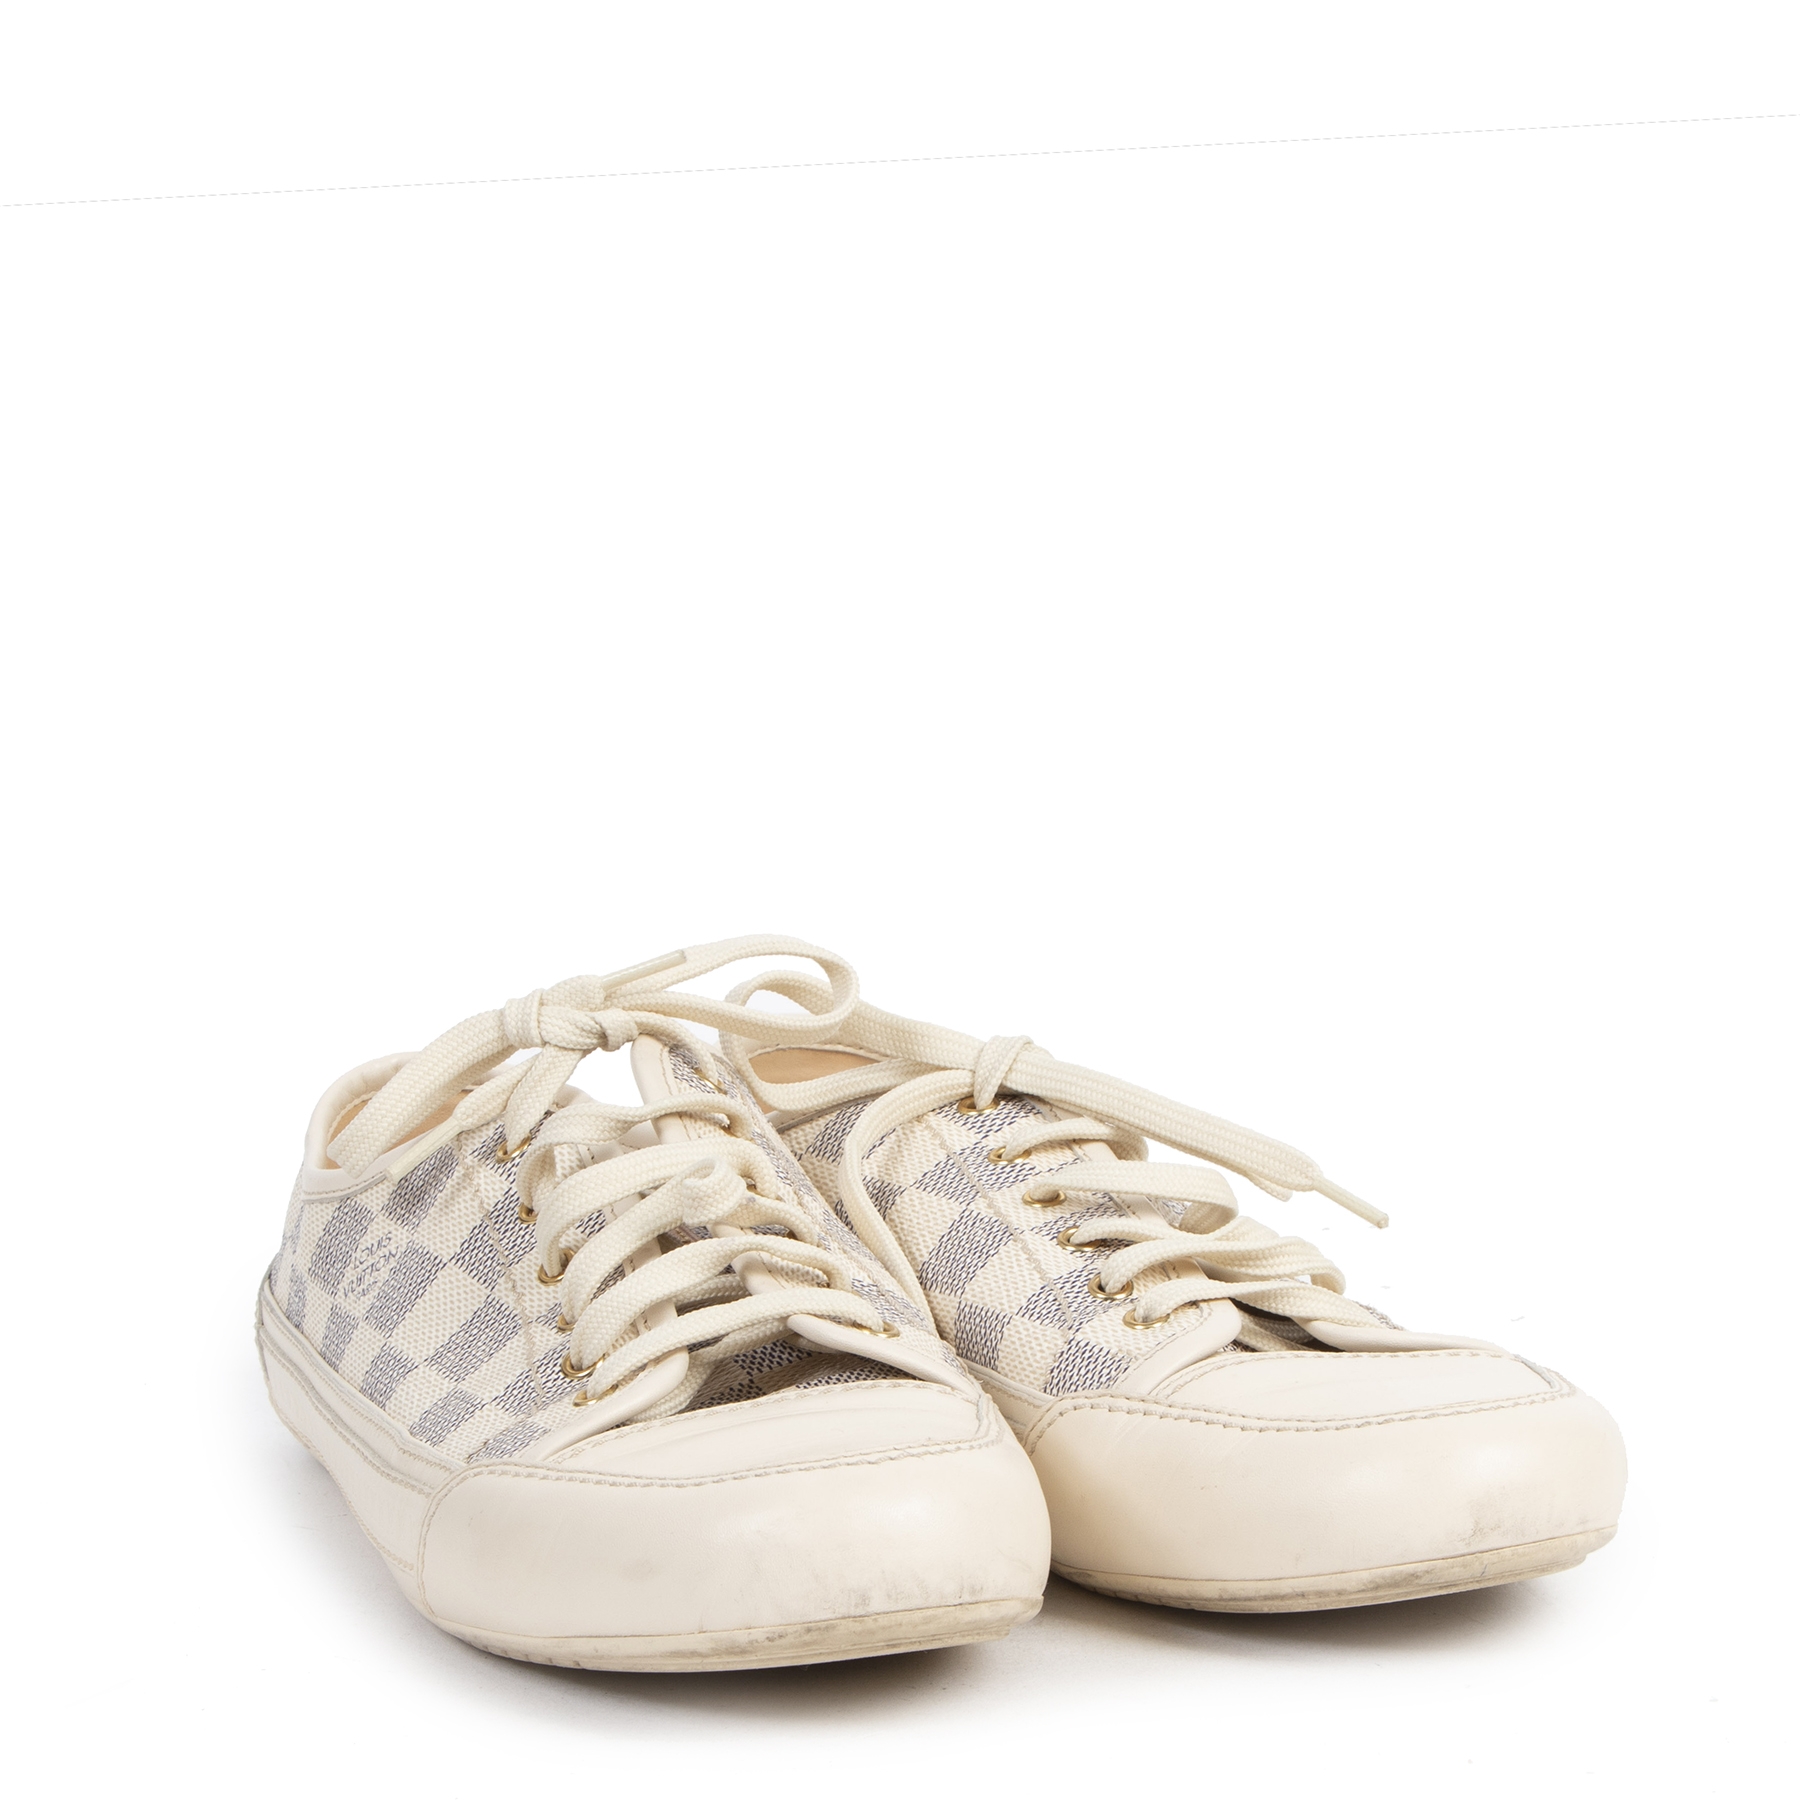 Louis Vuitton, Shoes, Louis Vuitton Damier Azur Sneakers Worn But In Good  Condition Size 3